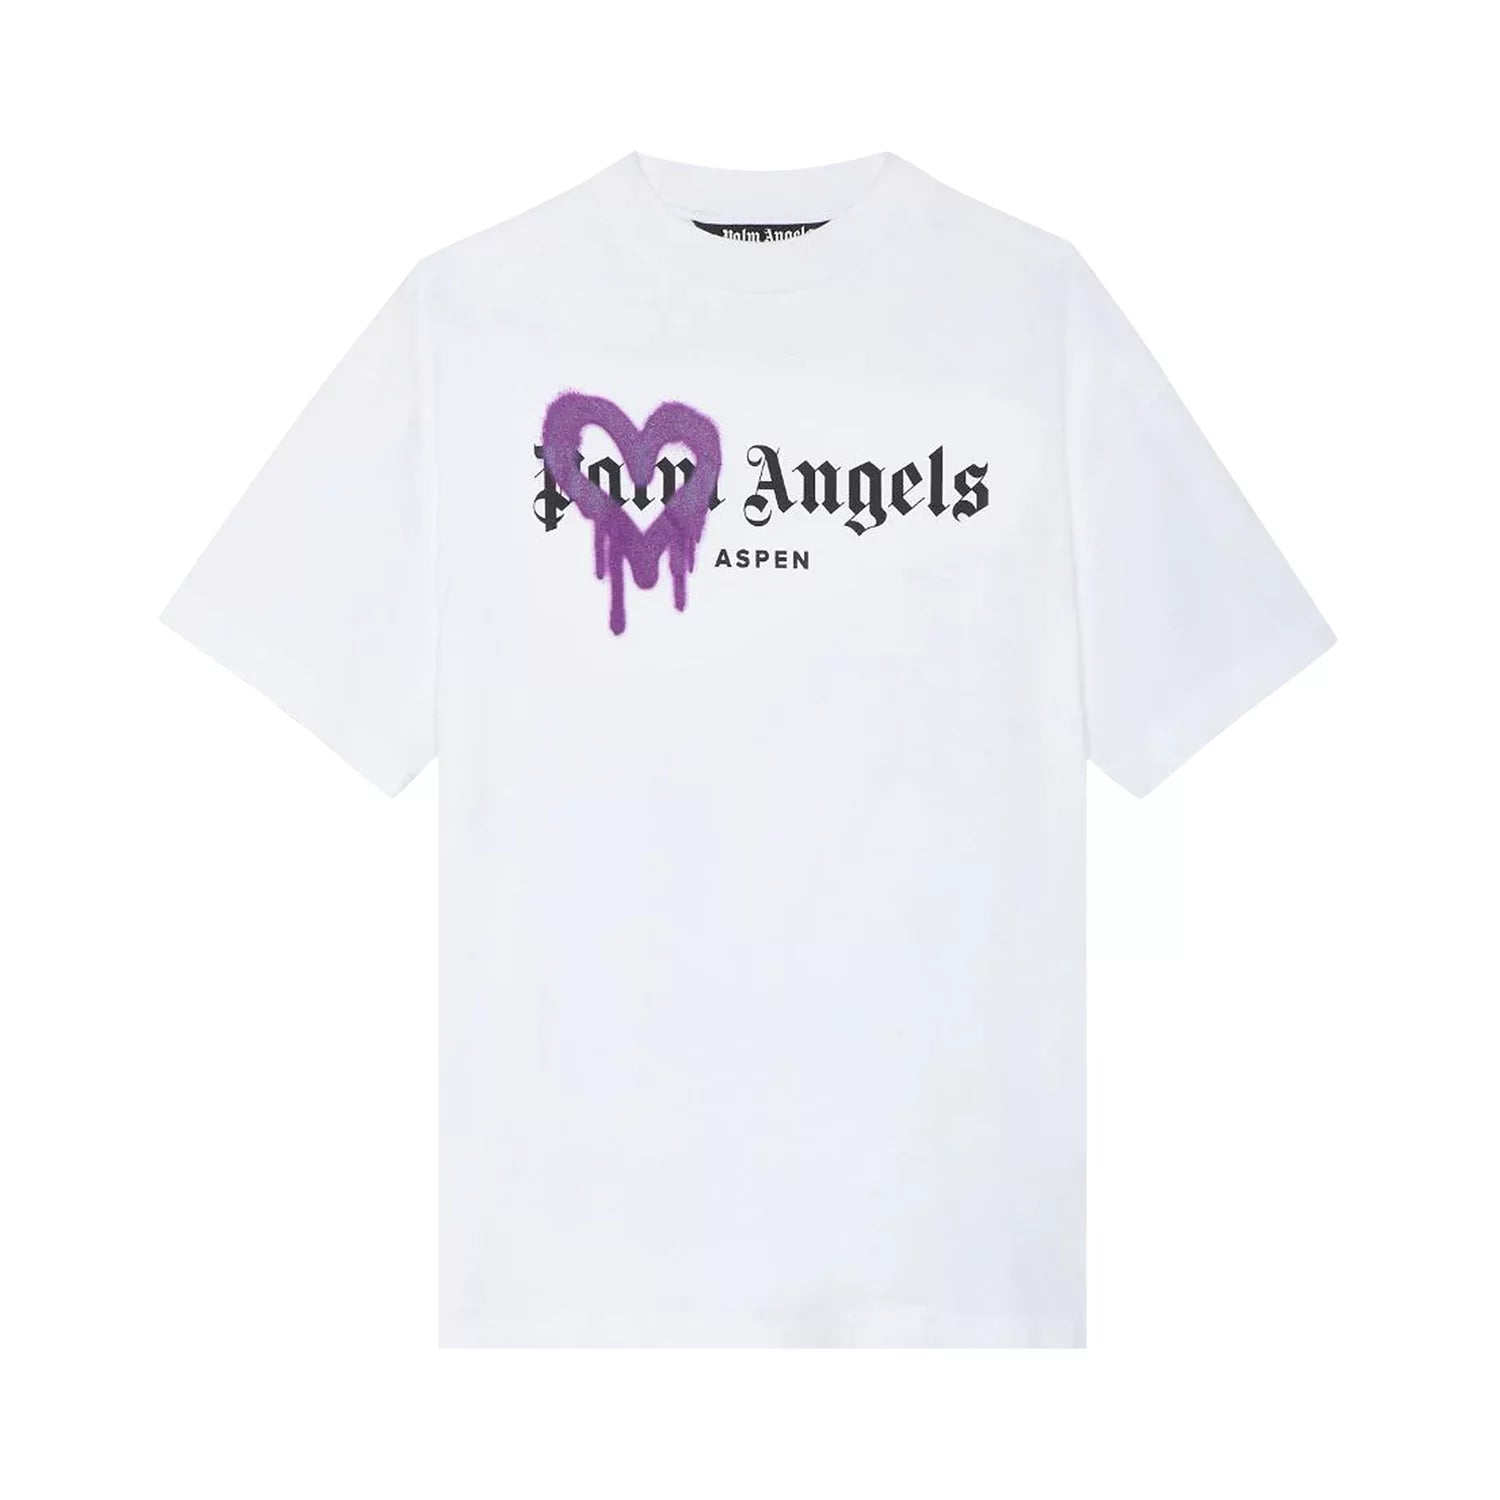 Palm Angels Aspen Heart Sprayed Tee 'White/Purple' Clothing - RepKings